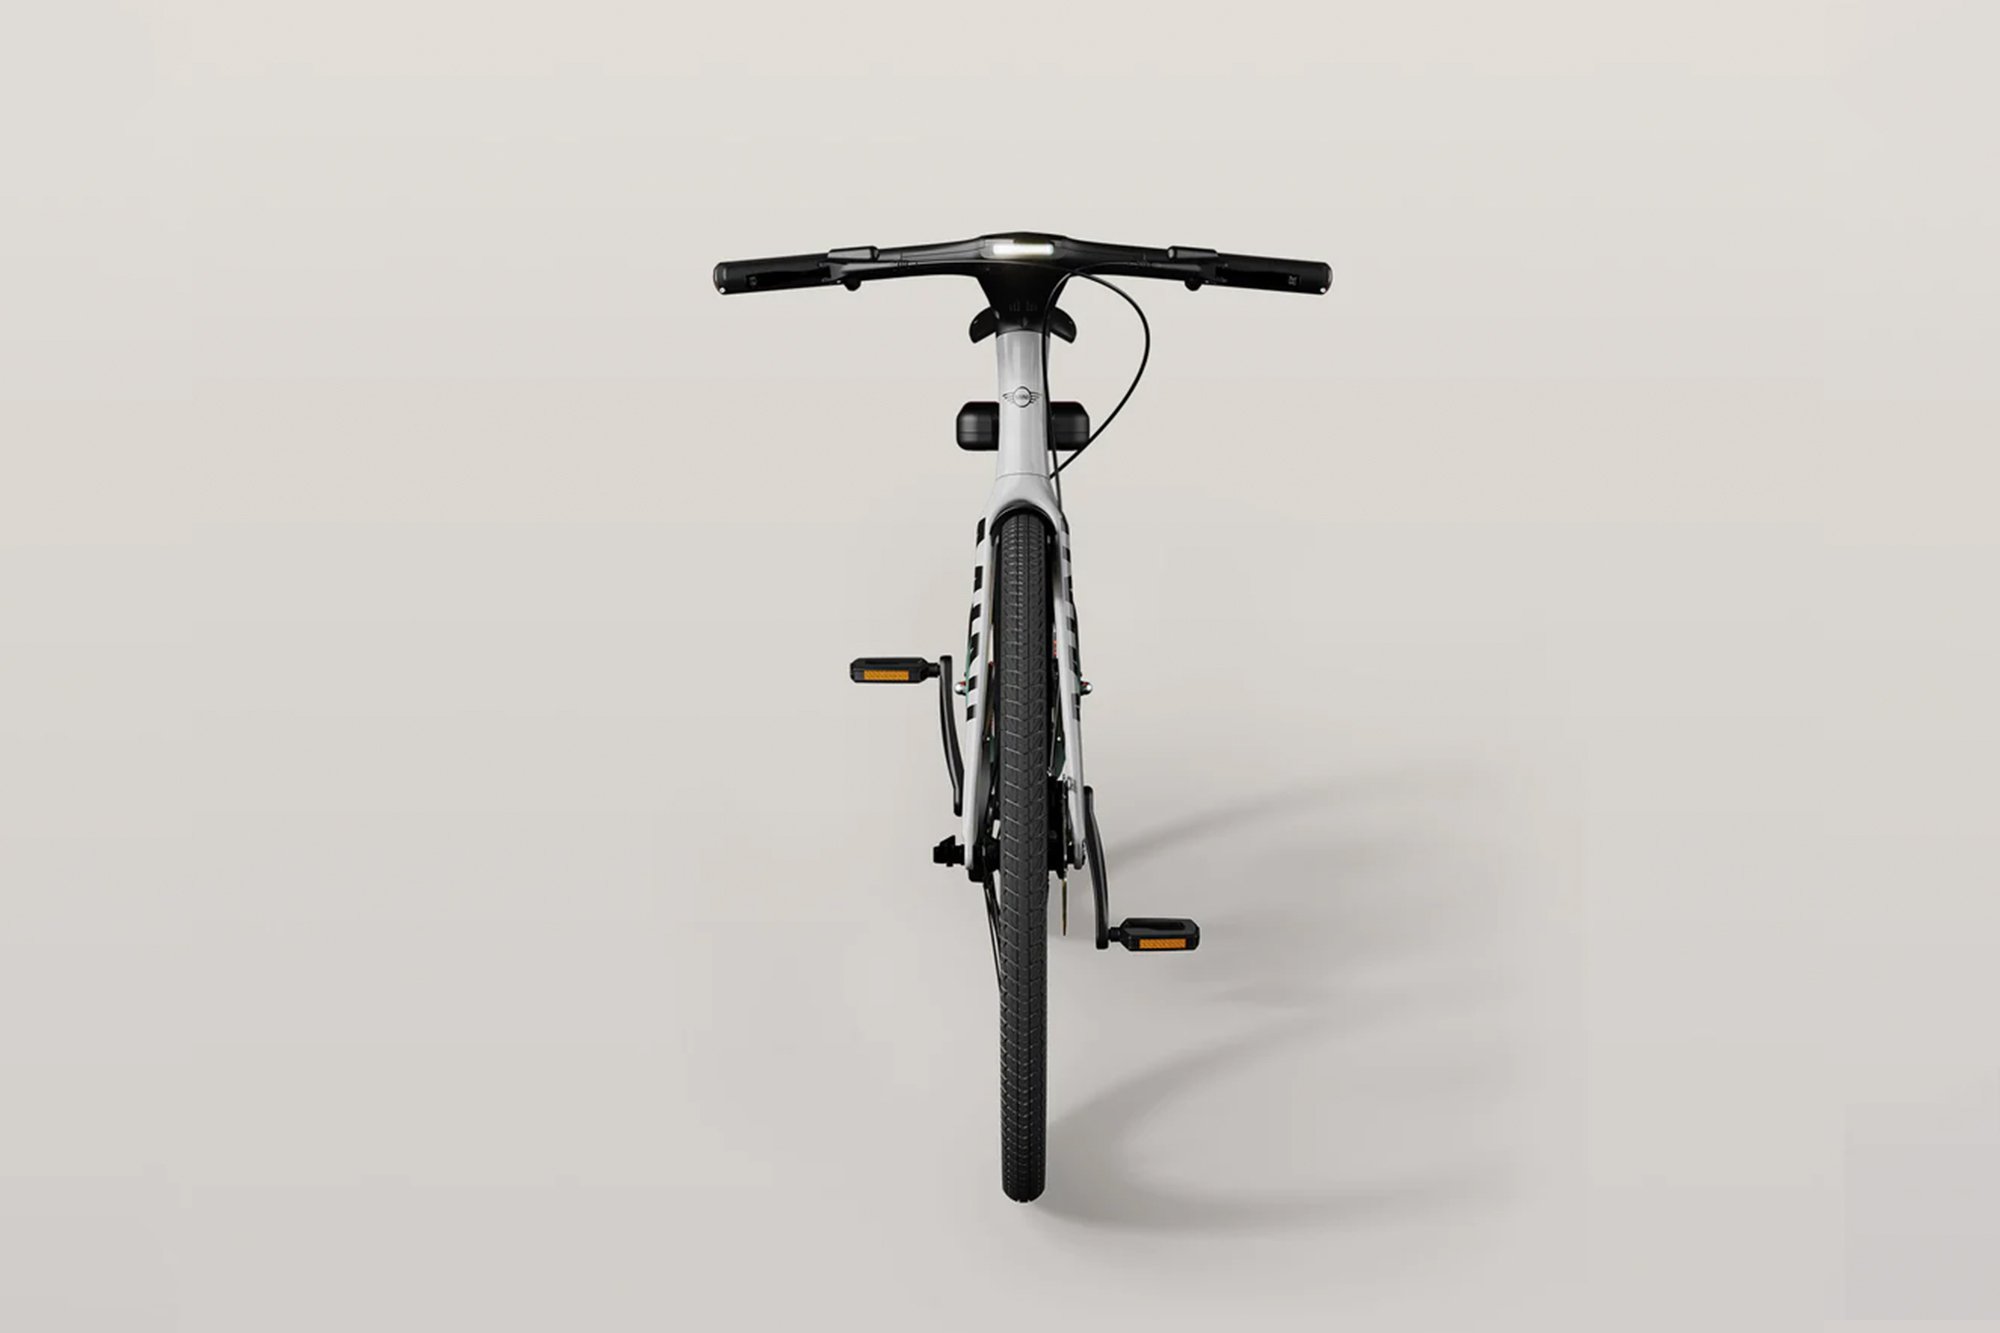 The MINI E-Bike 1 in collaborative design with Angell Mobility